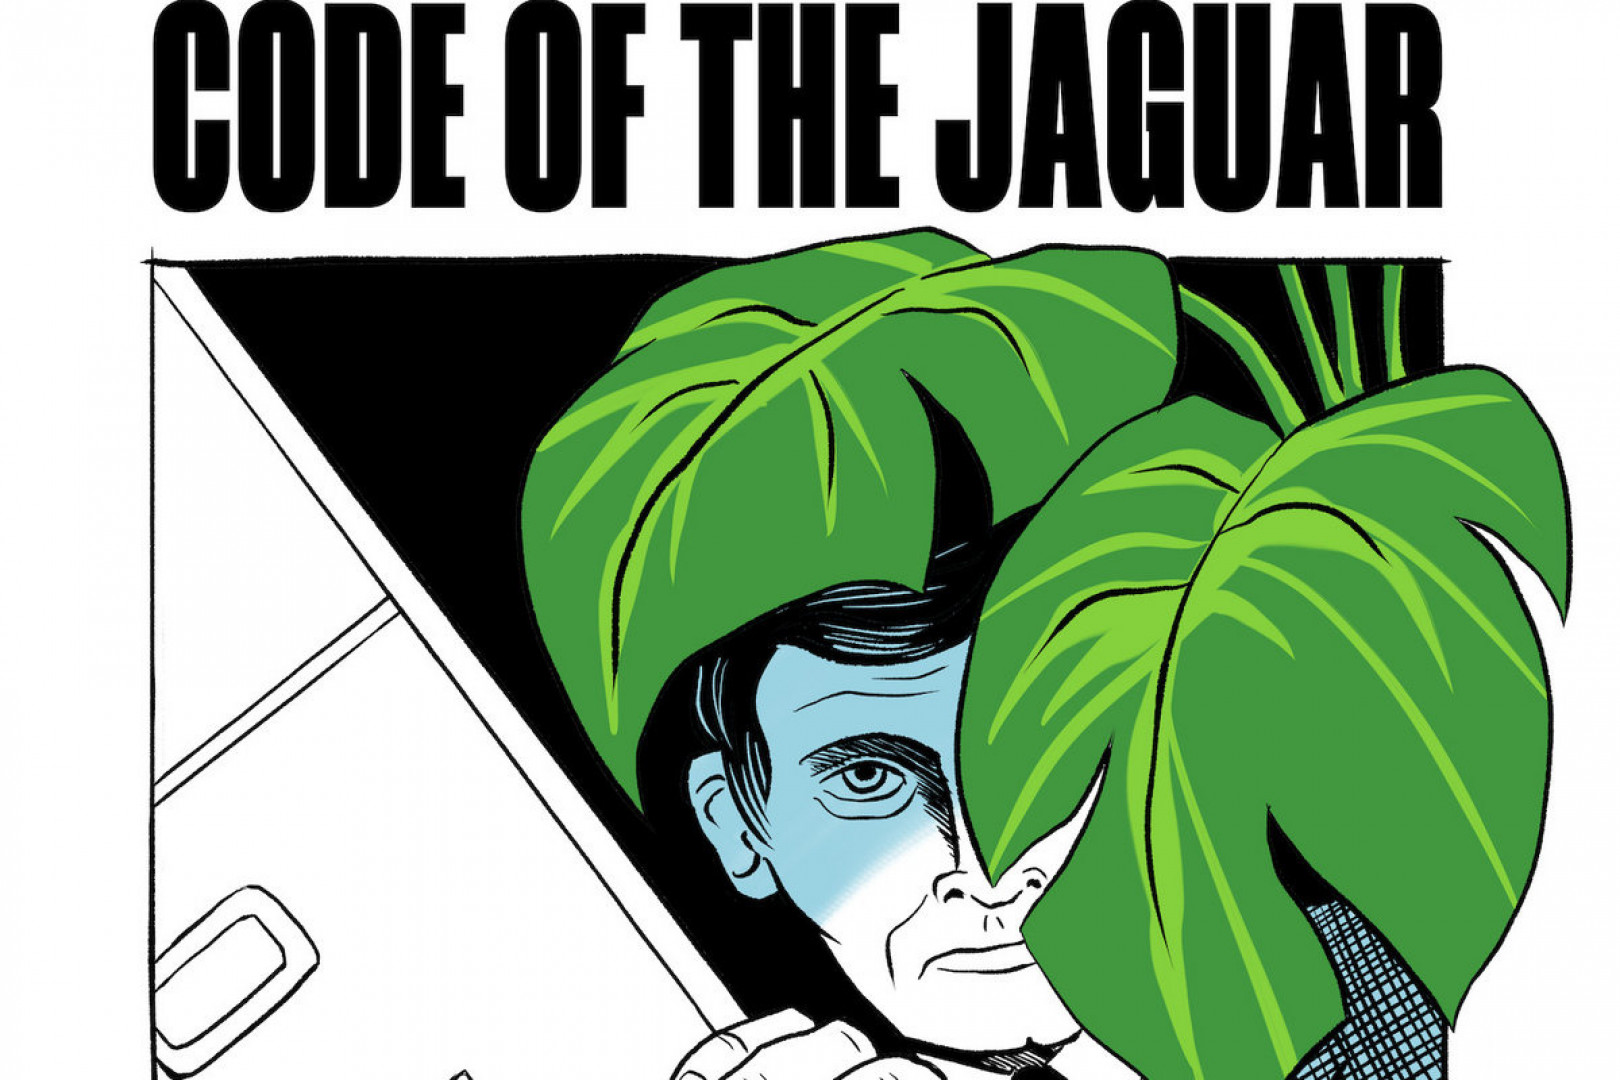 Code of the Jaguar release 7-inch single